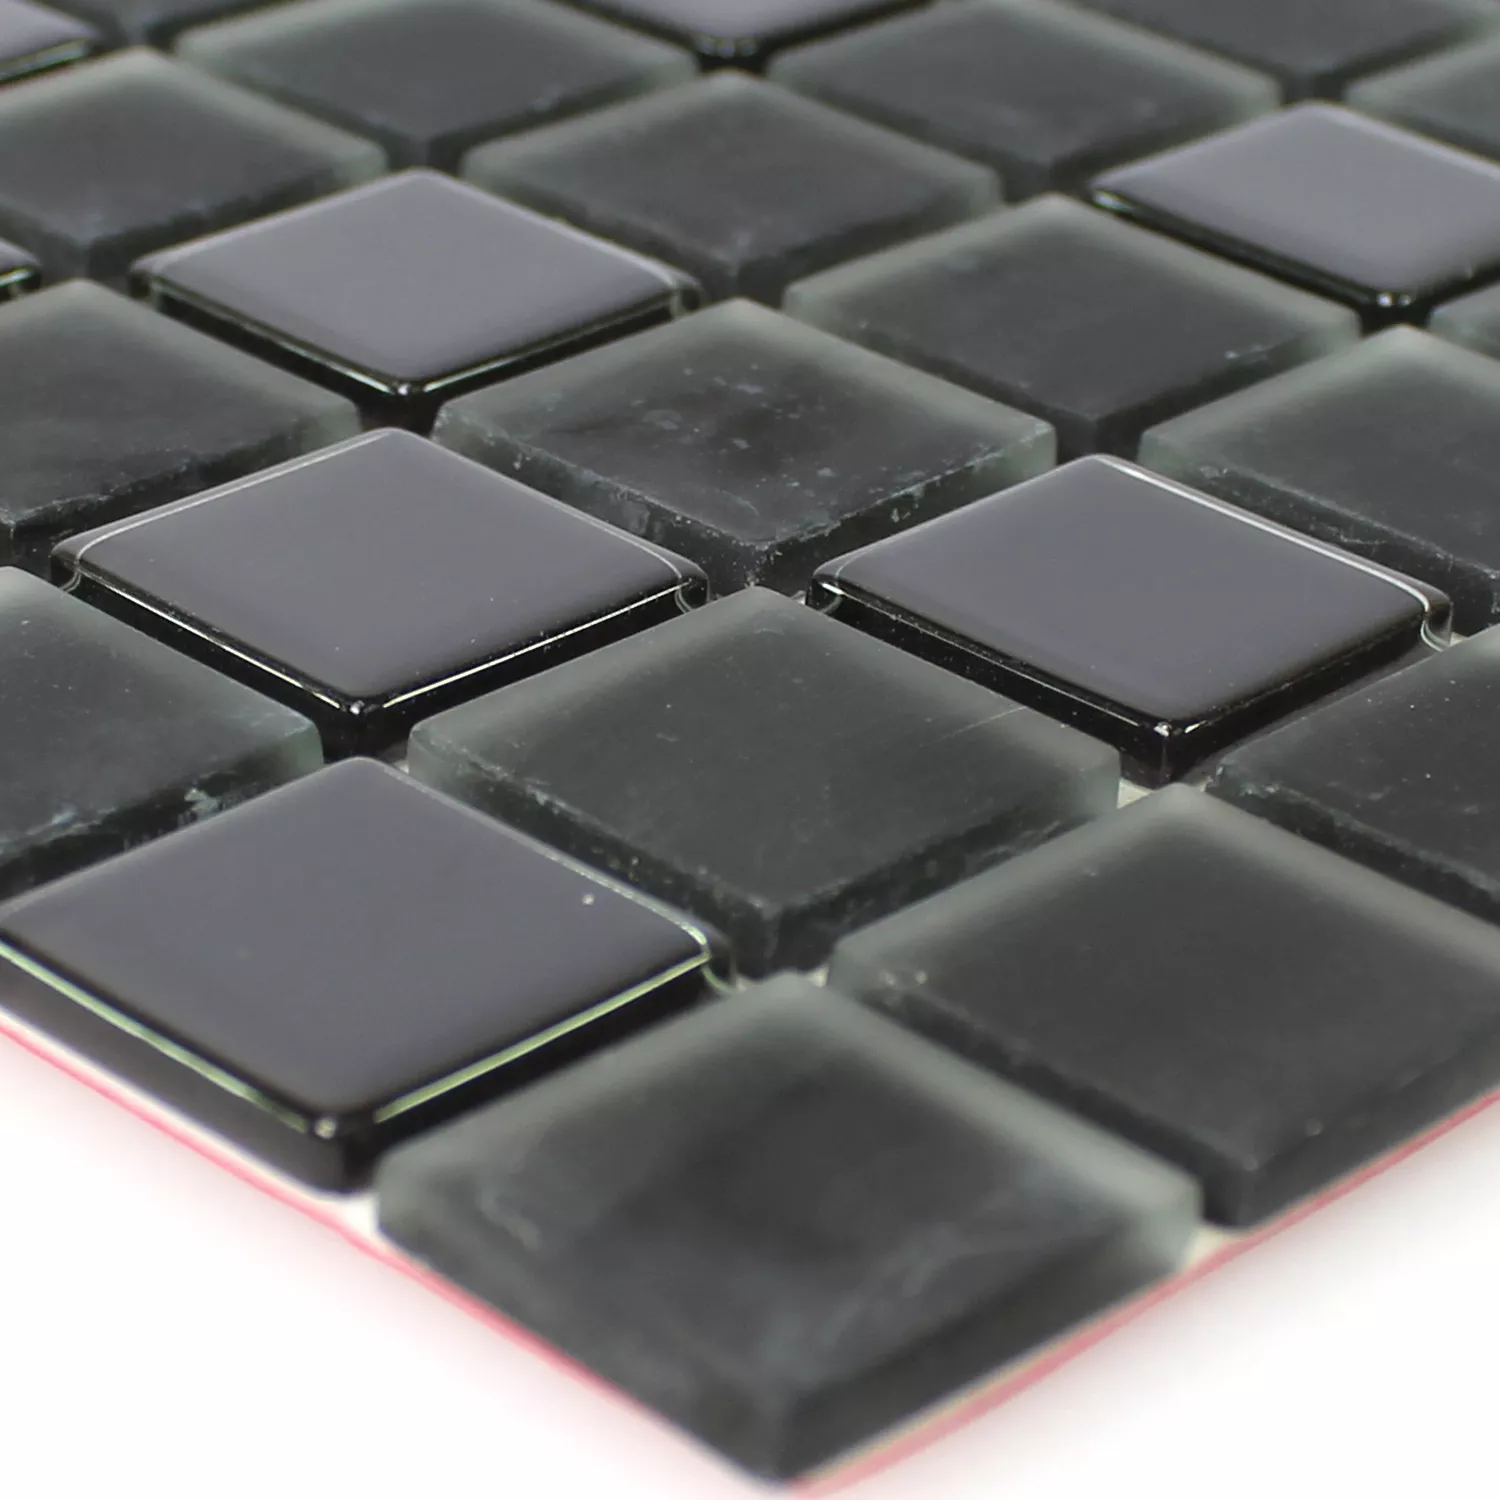 Mosaic Tiles Glass Self Adhesive Black Uni